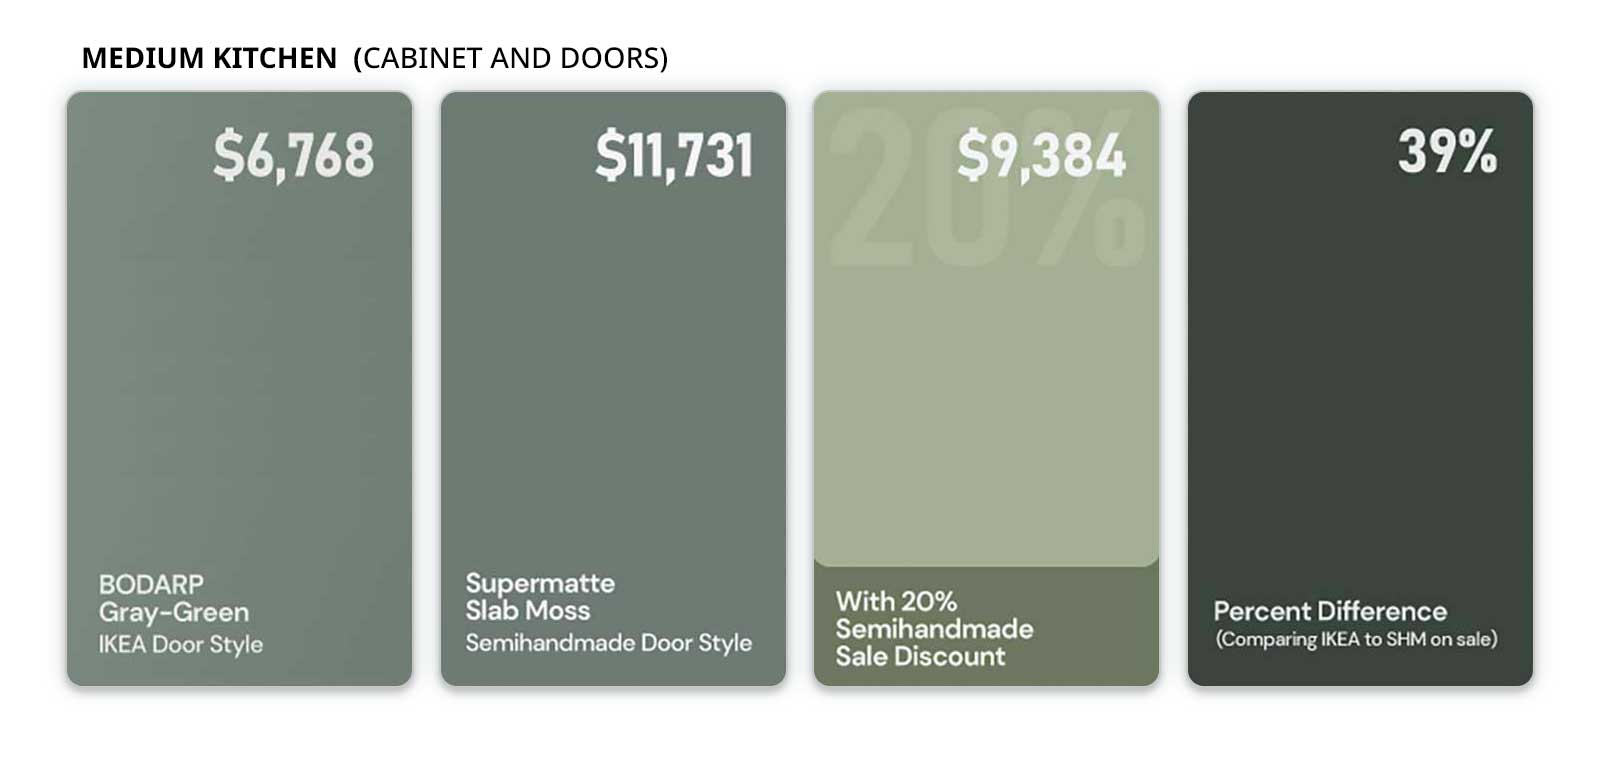 Medium kitchen cabinets and doors price comparison